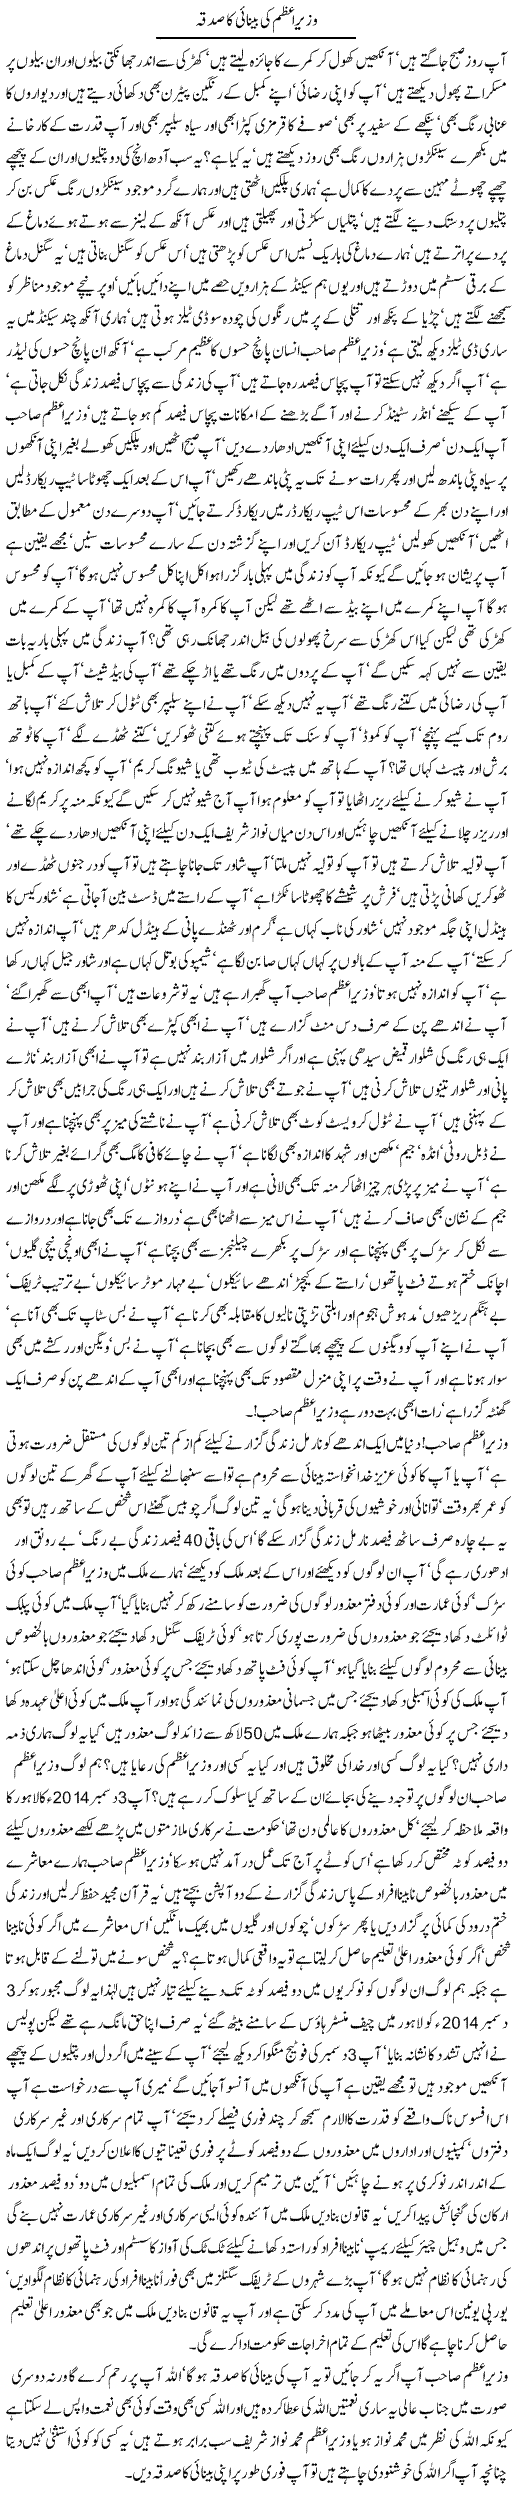 Wazir e Azam ki Benay ka Sadqa by Javed Chaudhry